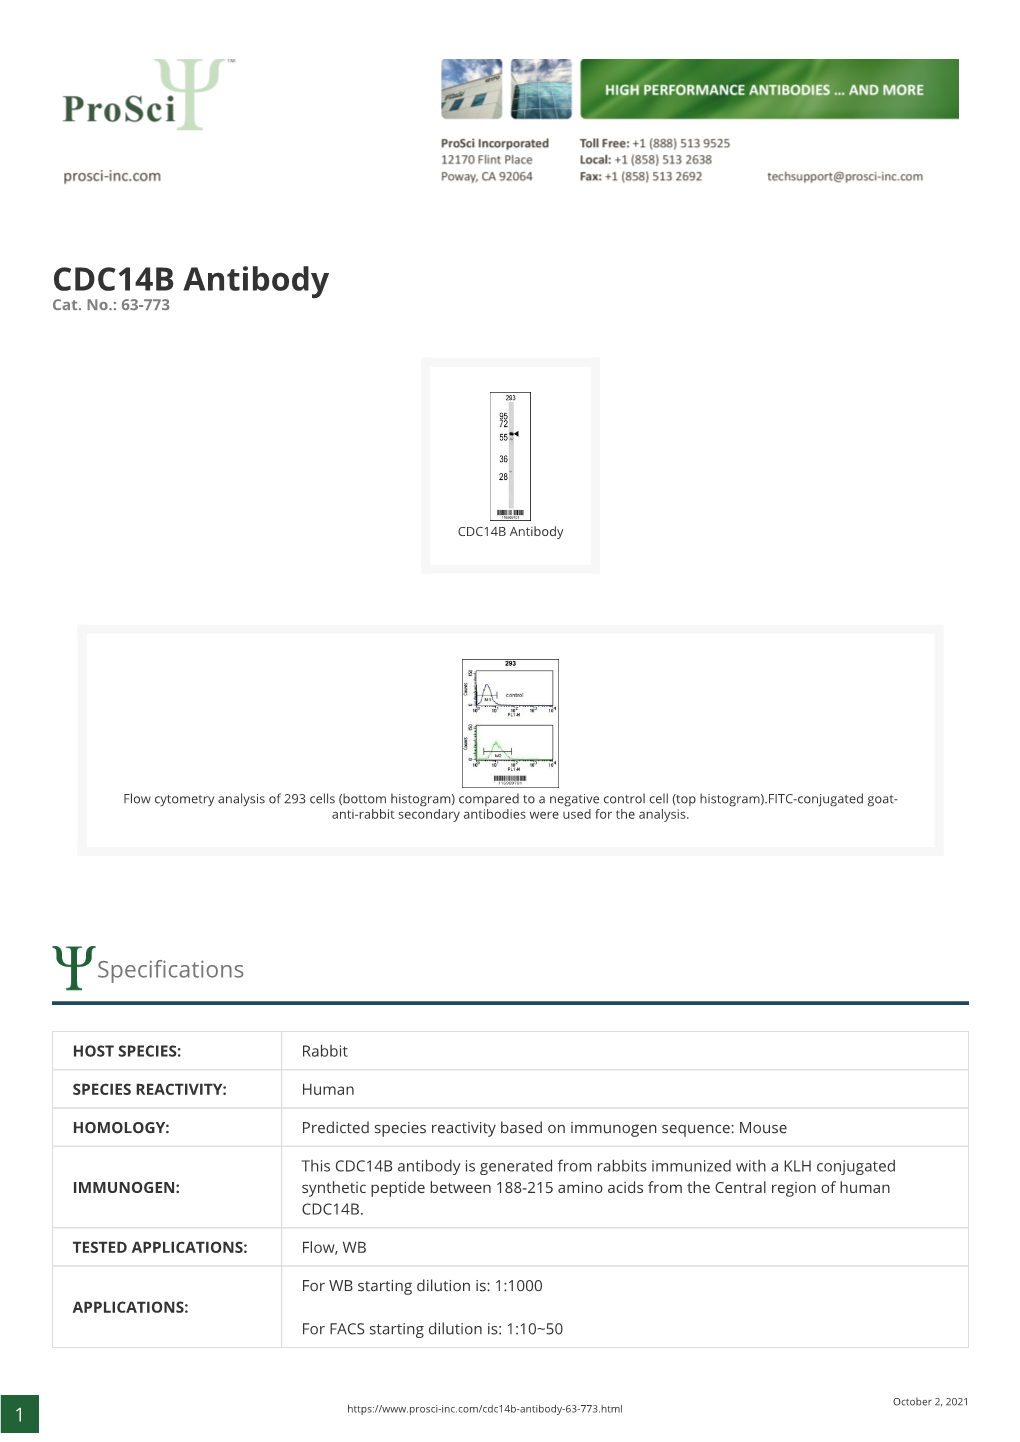 CDC14B Antibody Cat